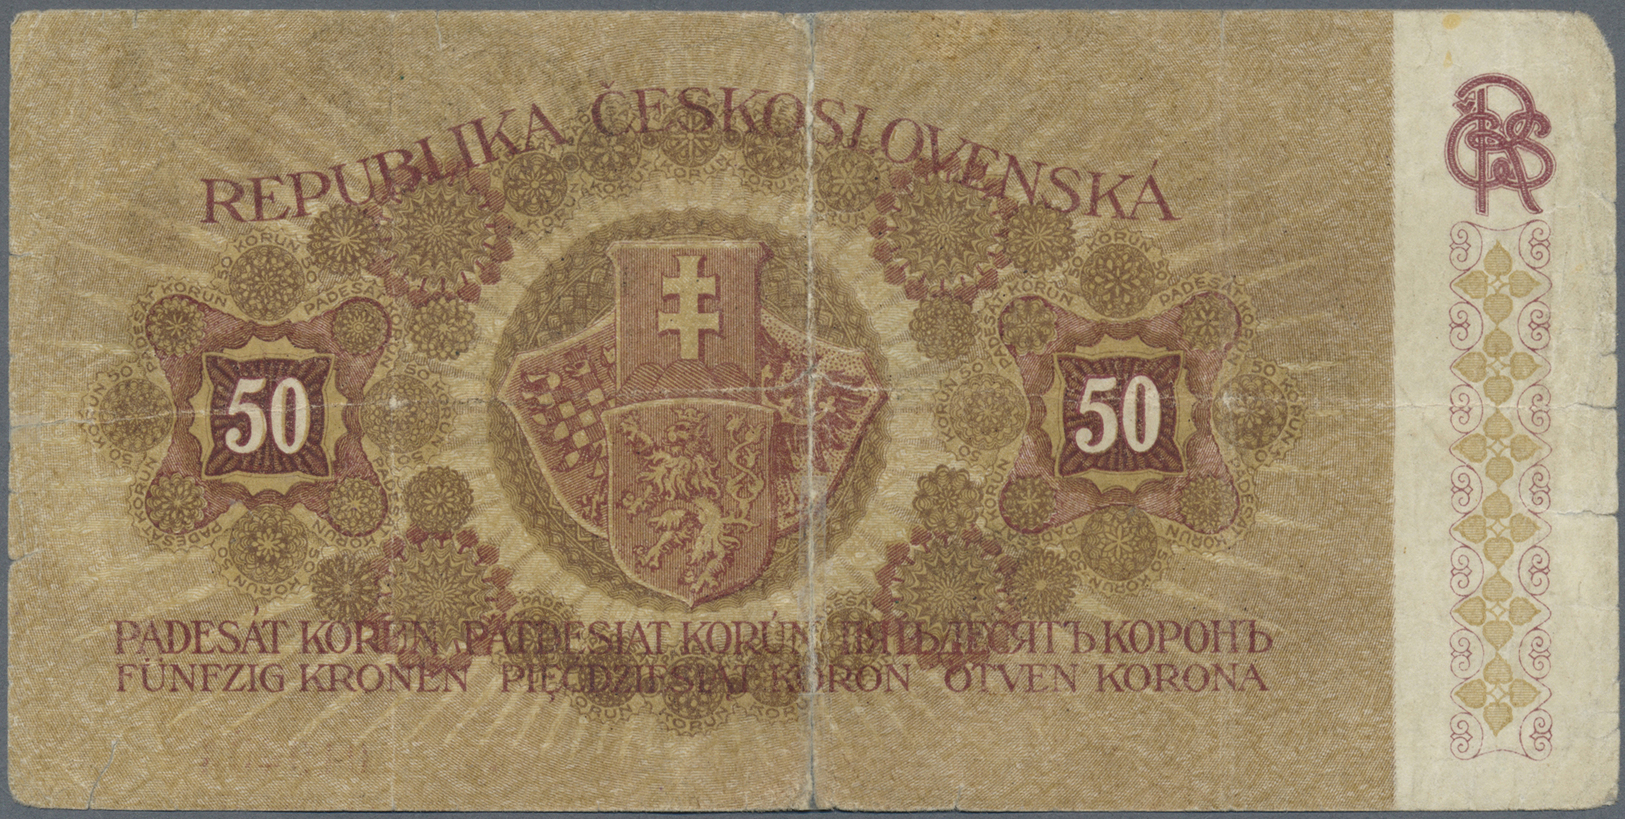 00632 Czechoslovakia / Tschechoslowakei: 50 Korun 1919, P.10, Rare Note In Well Worn Condition With Many Folds And Creas - Czechoslovakia